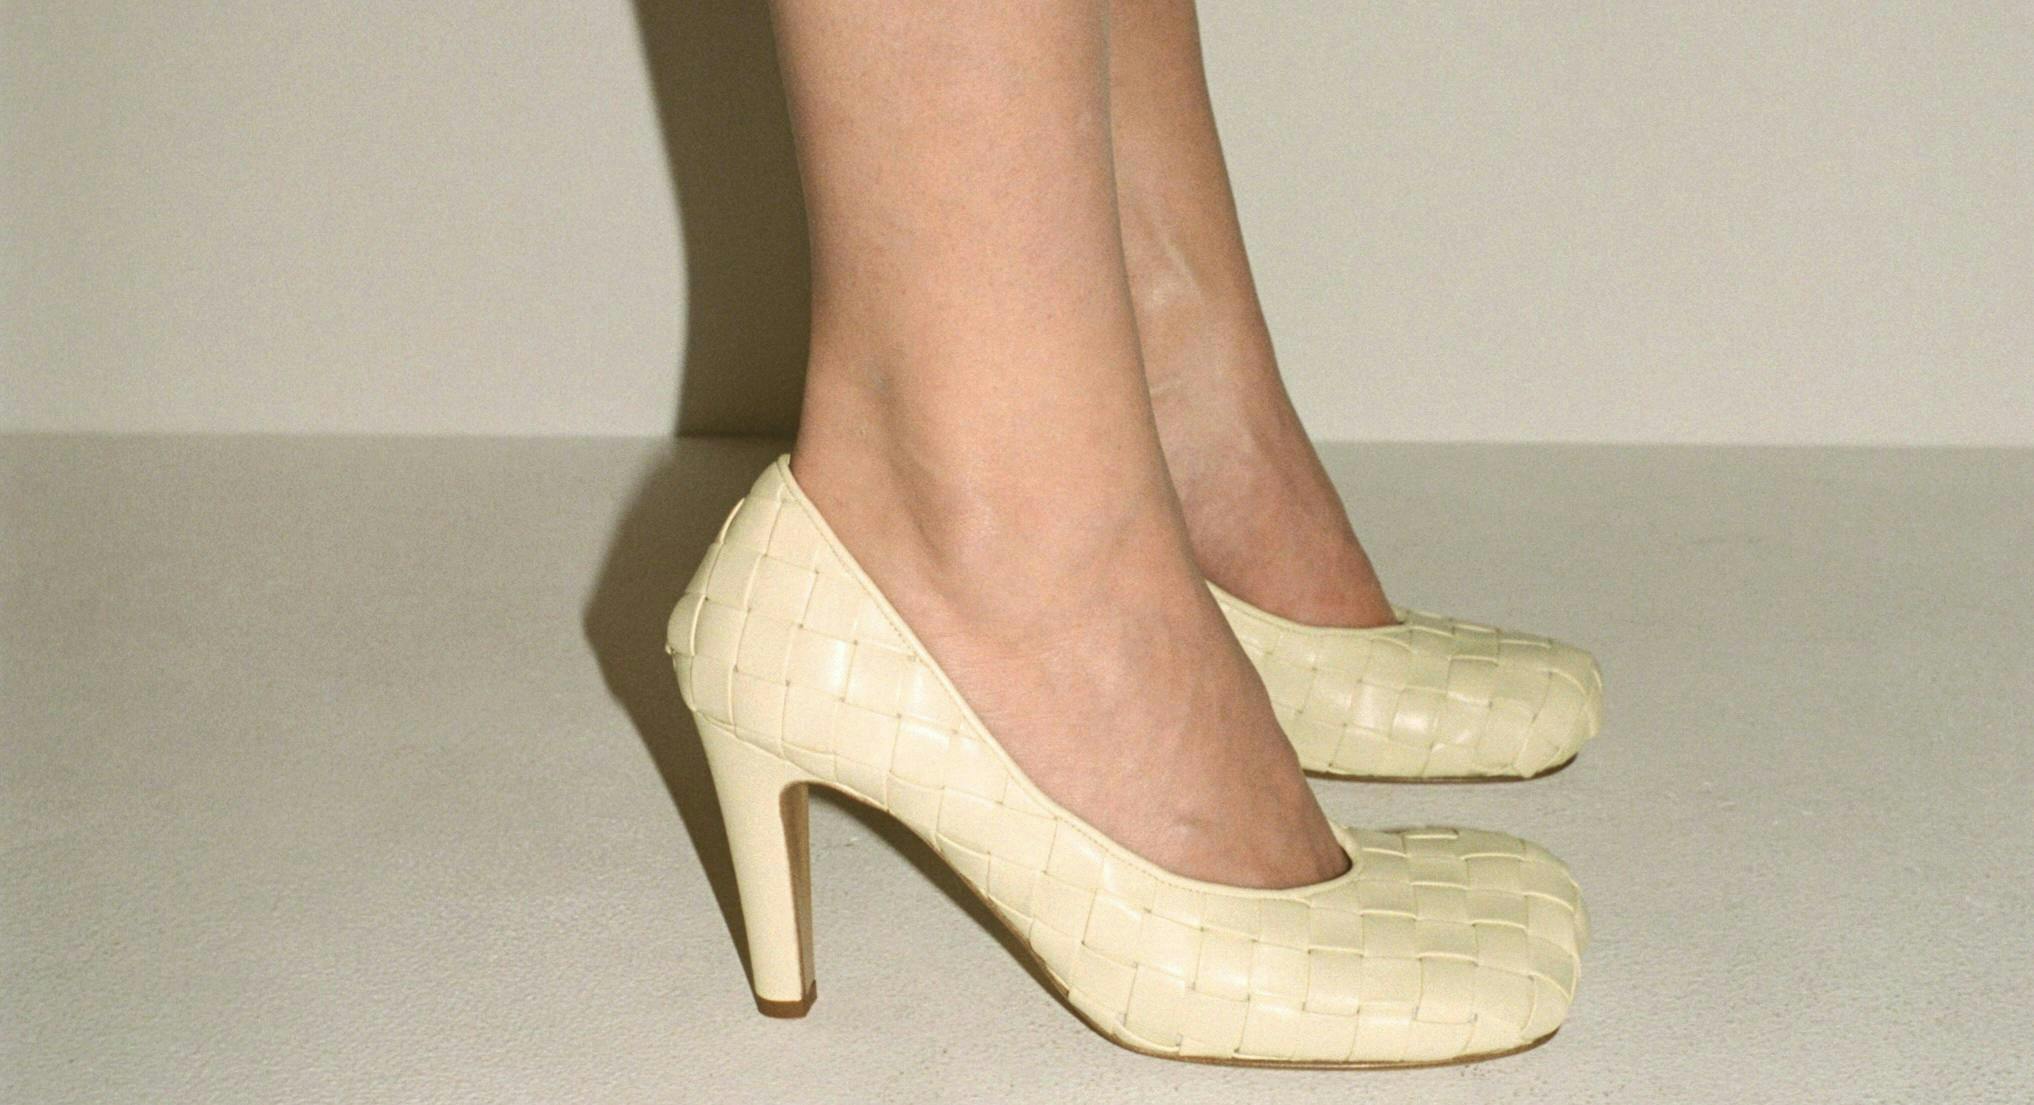 clothing apparel footwear shoe person human high heel